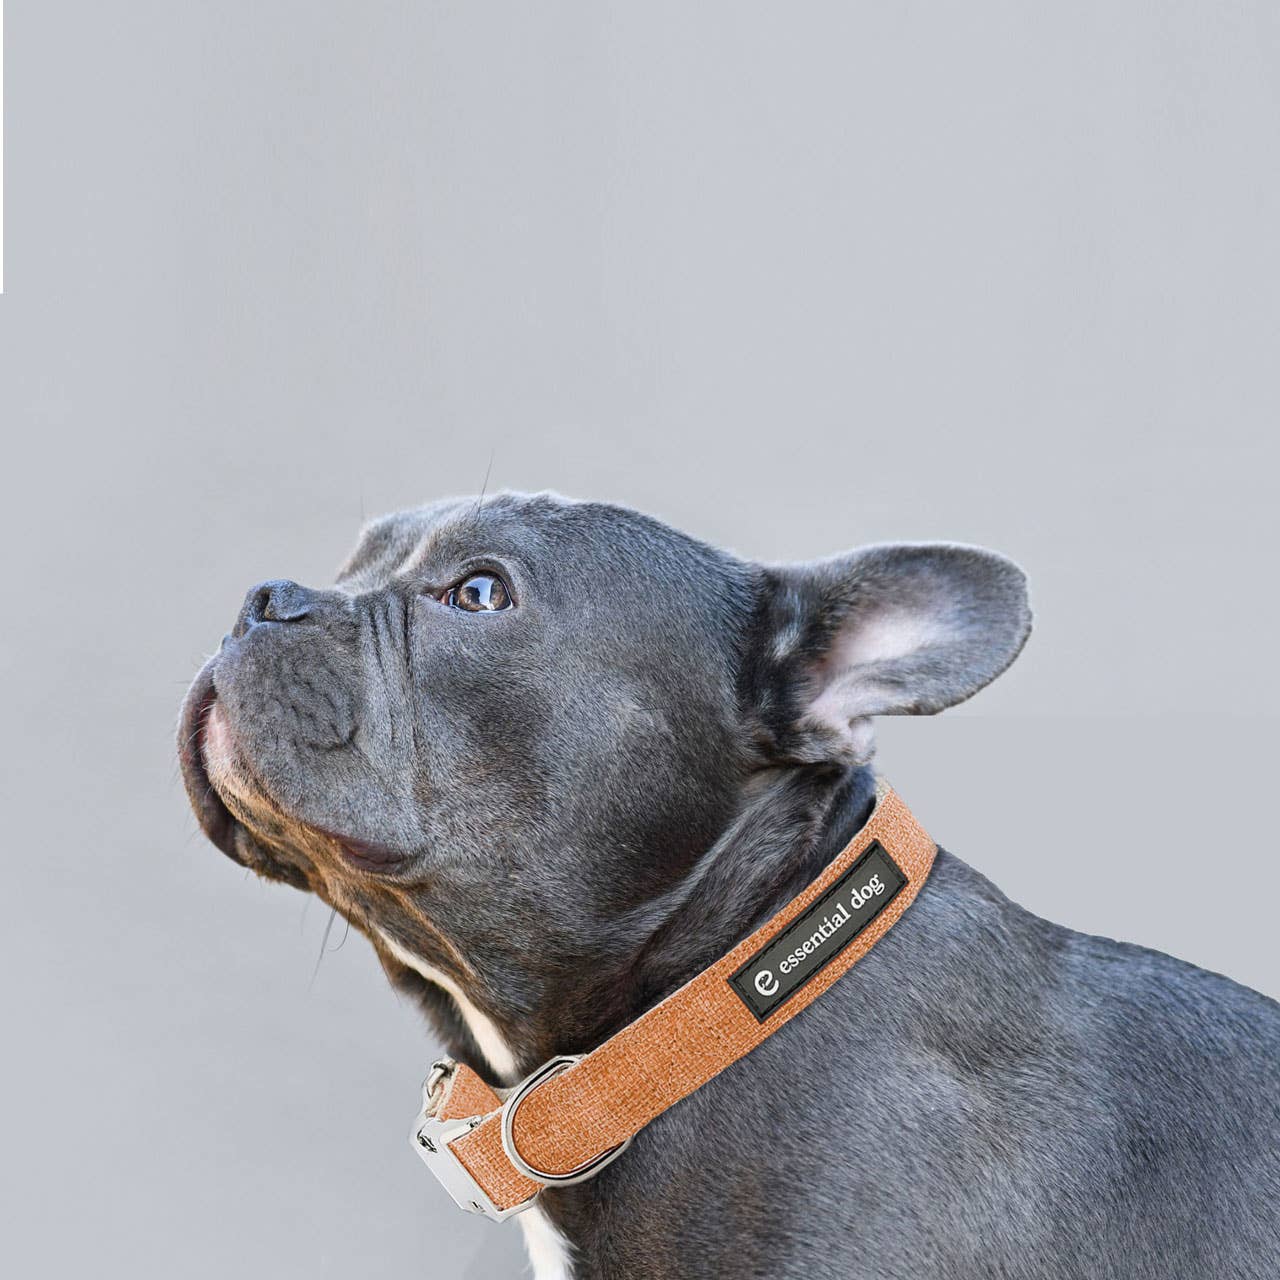 Cute blue french bulldog wearing the Organic Hemp & Cotton Dog Collar orange burst against a light background